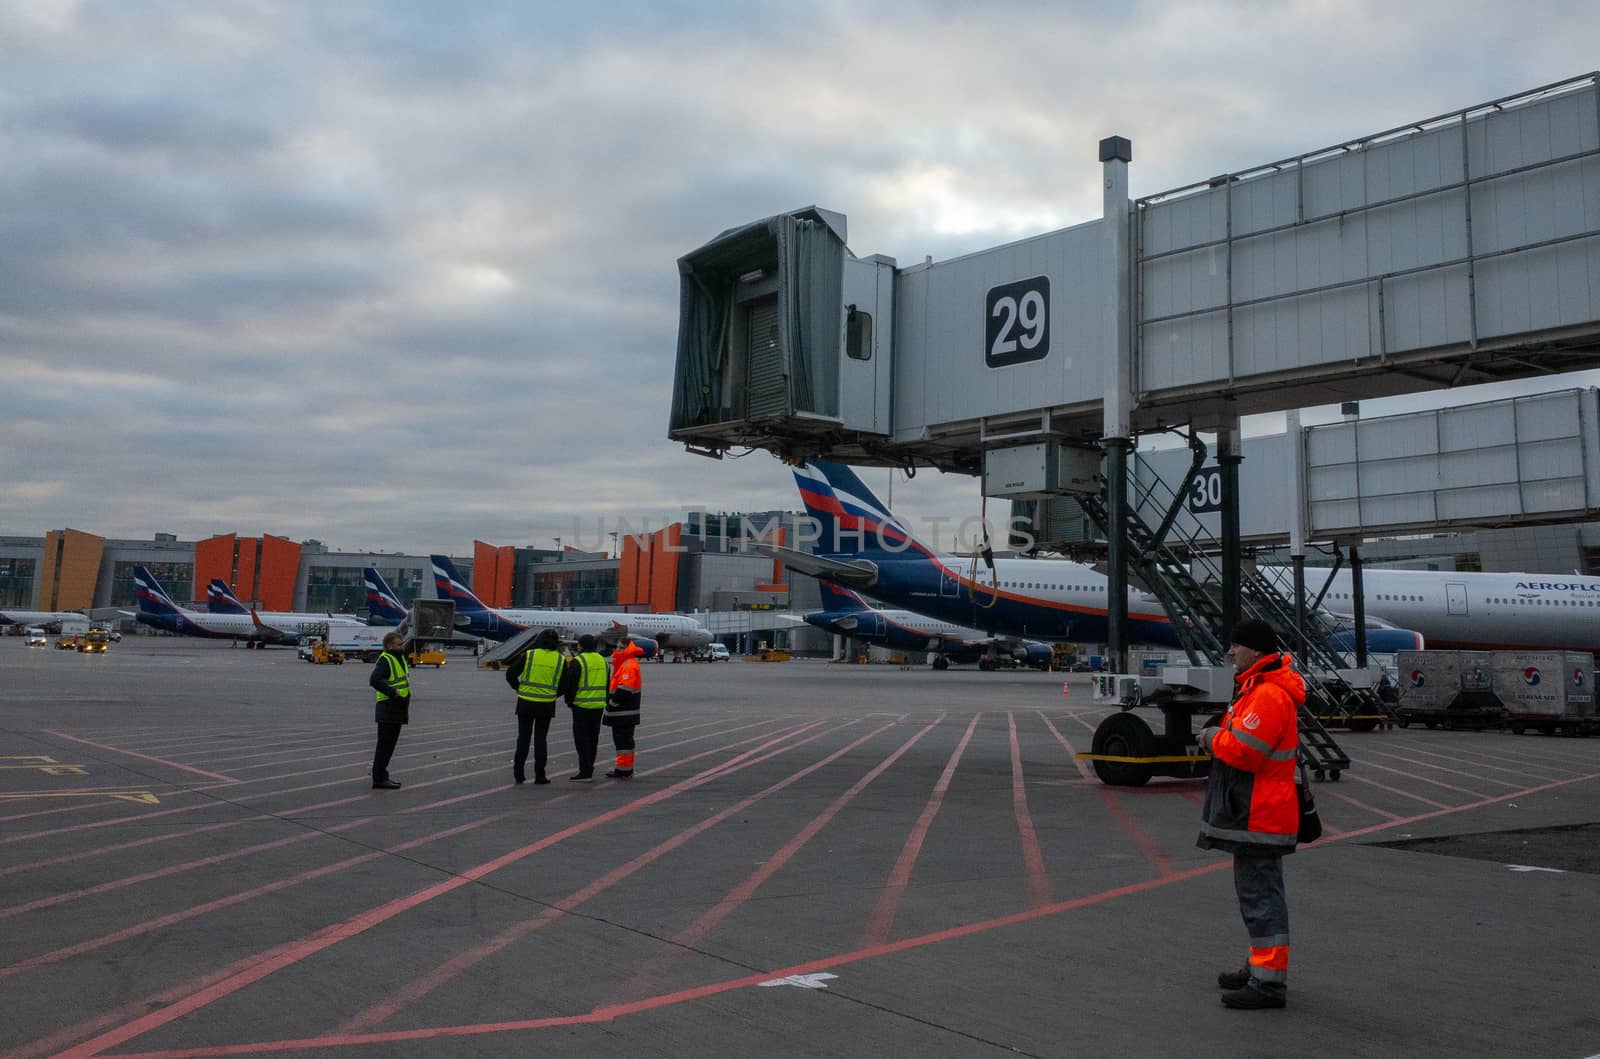 October 29 Moscow, Russia Passenger boarding bridge at Sheremetyevo International Airport.